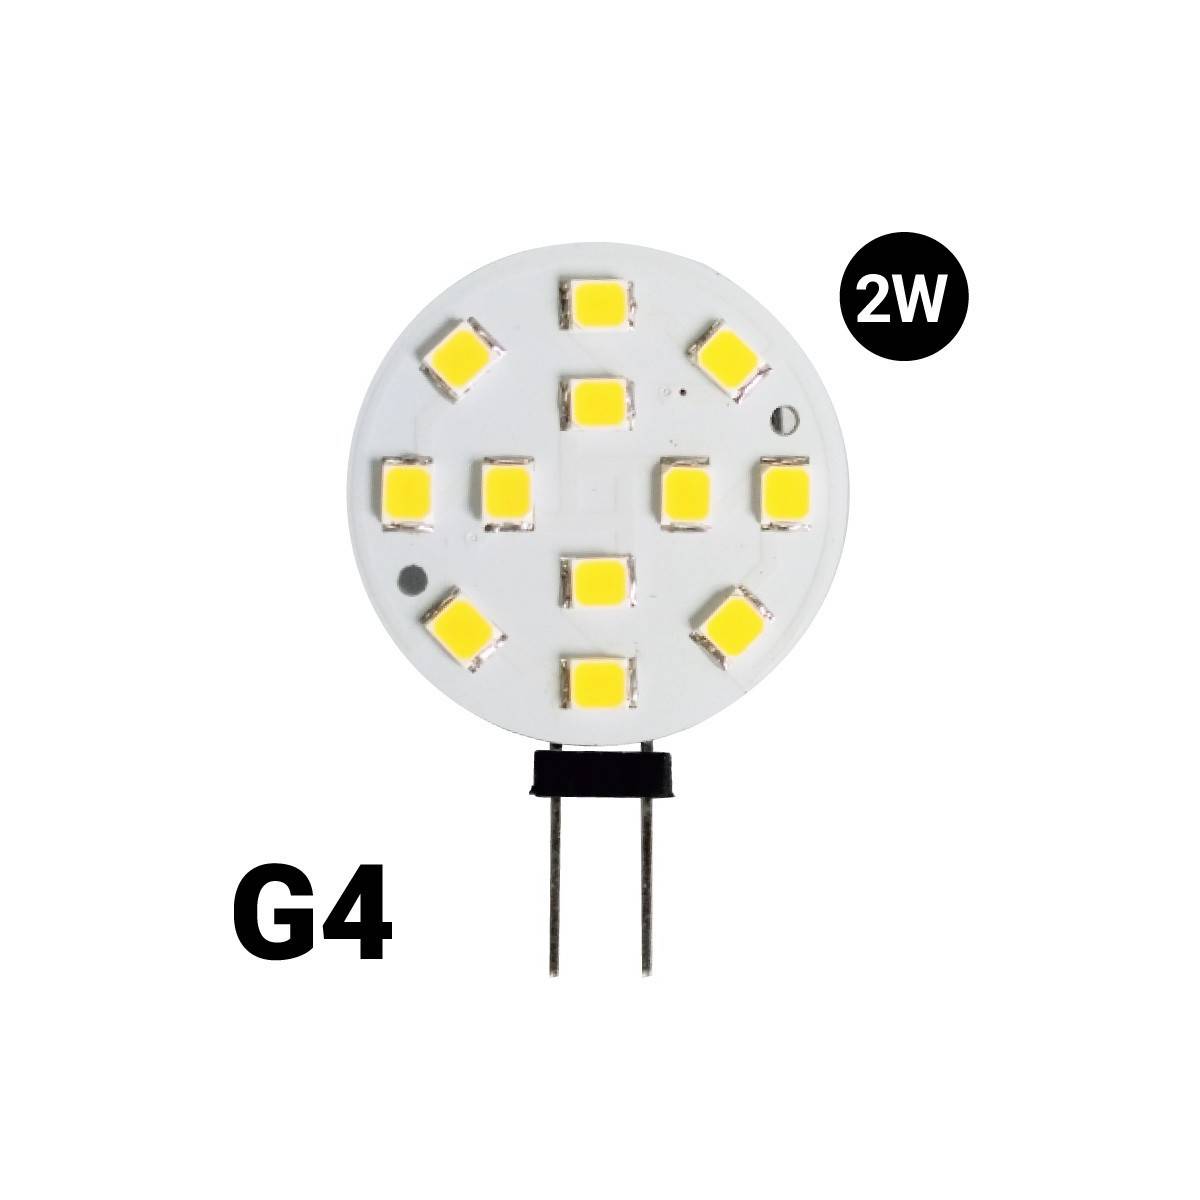 Lâmpada LED G4 Bi-Pin 2W plana 12V-DC/AC